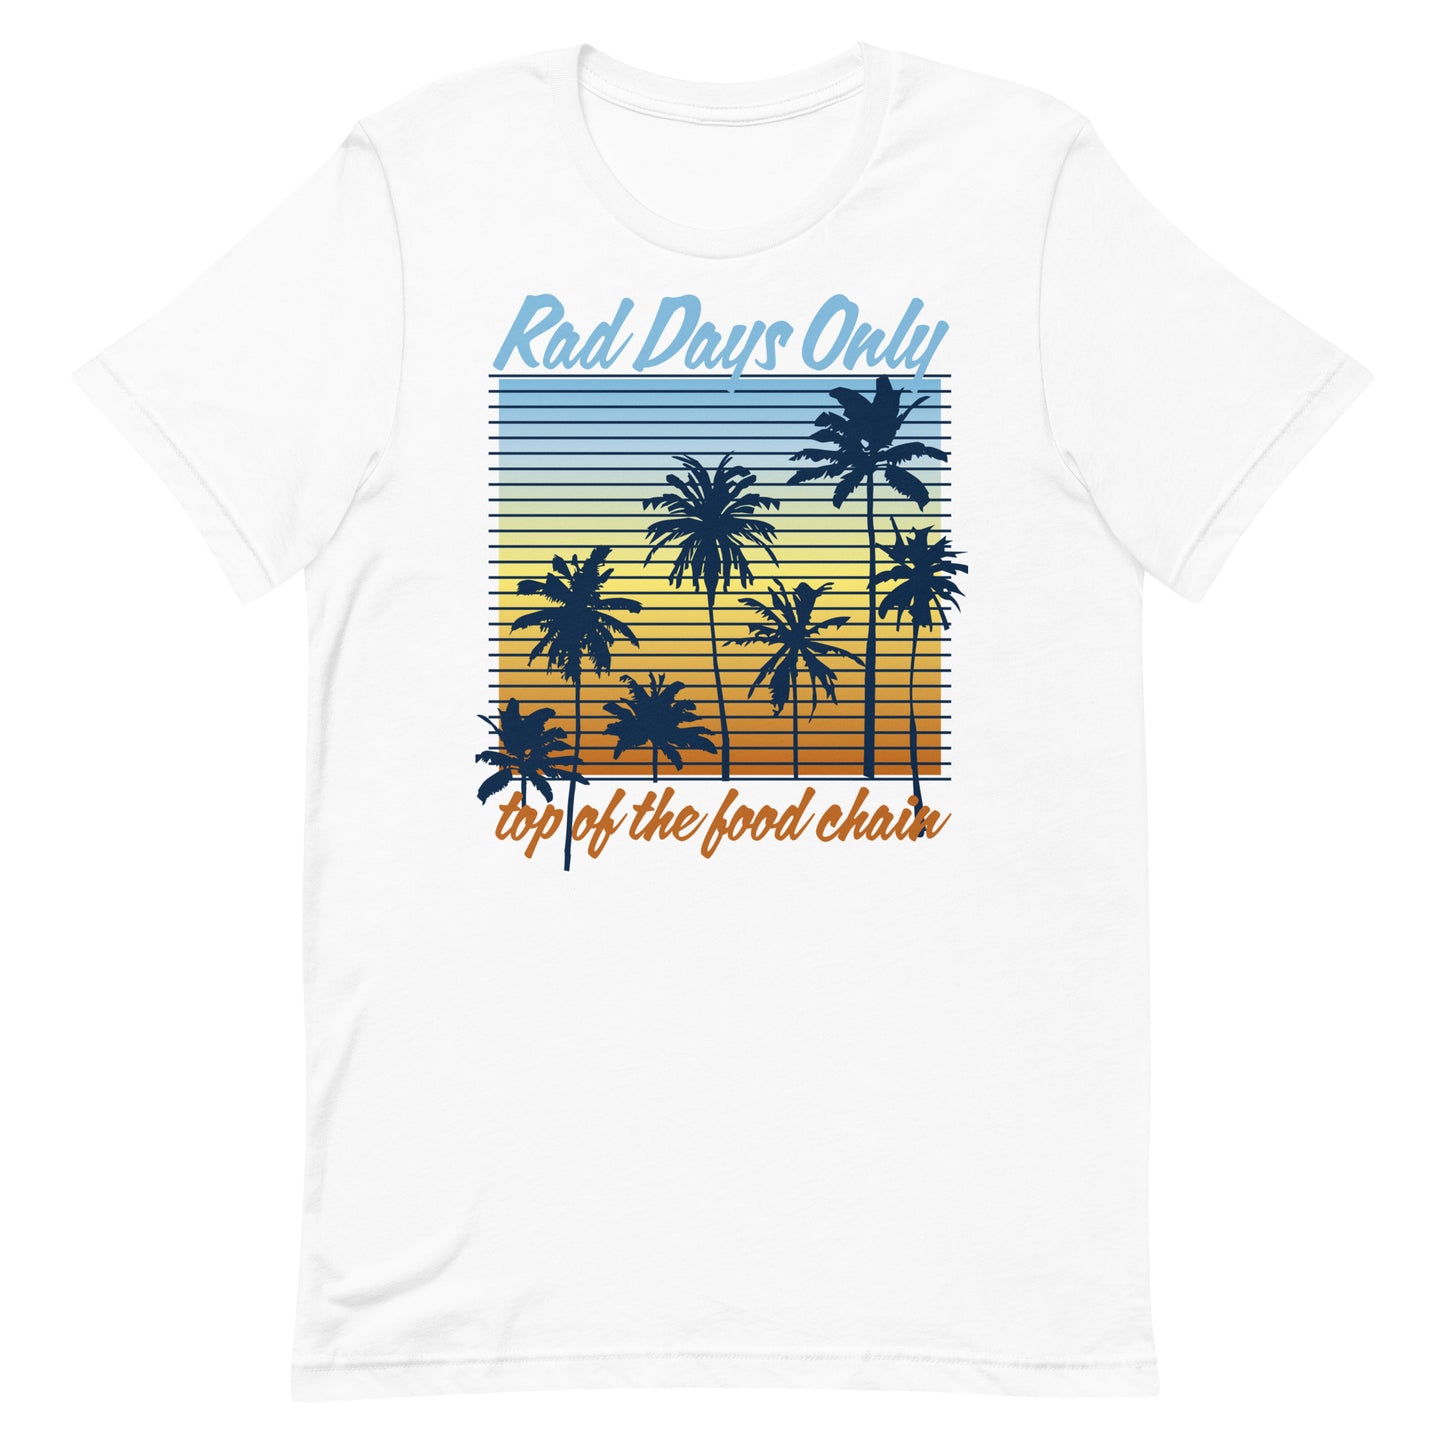 Rad Days Only t-shirt